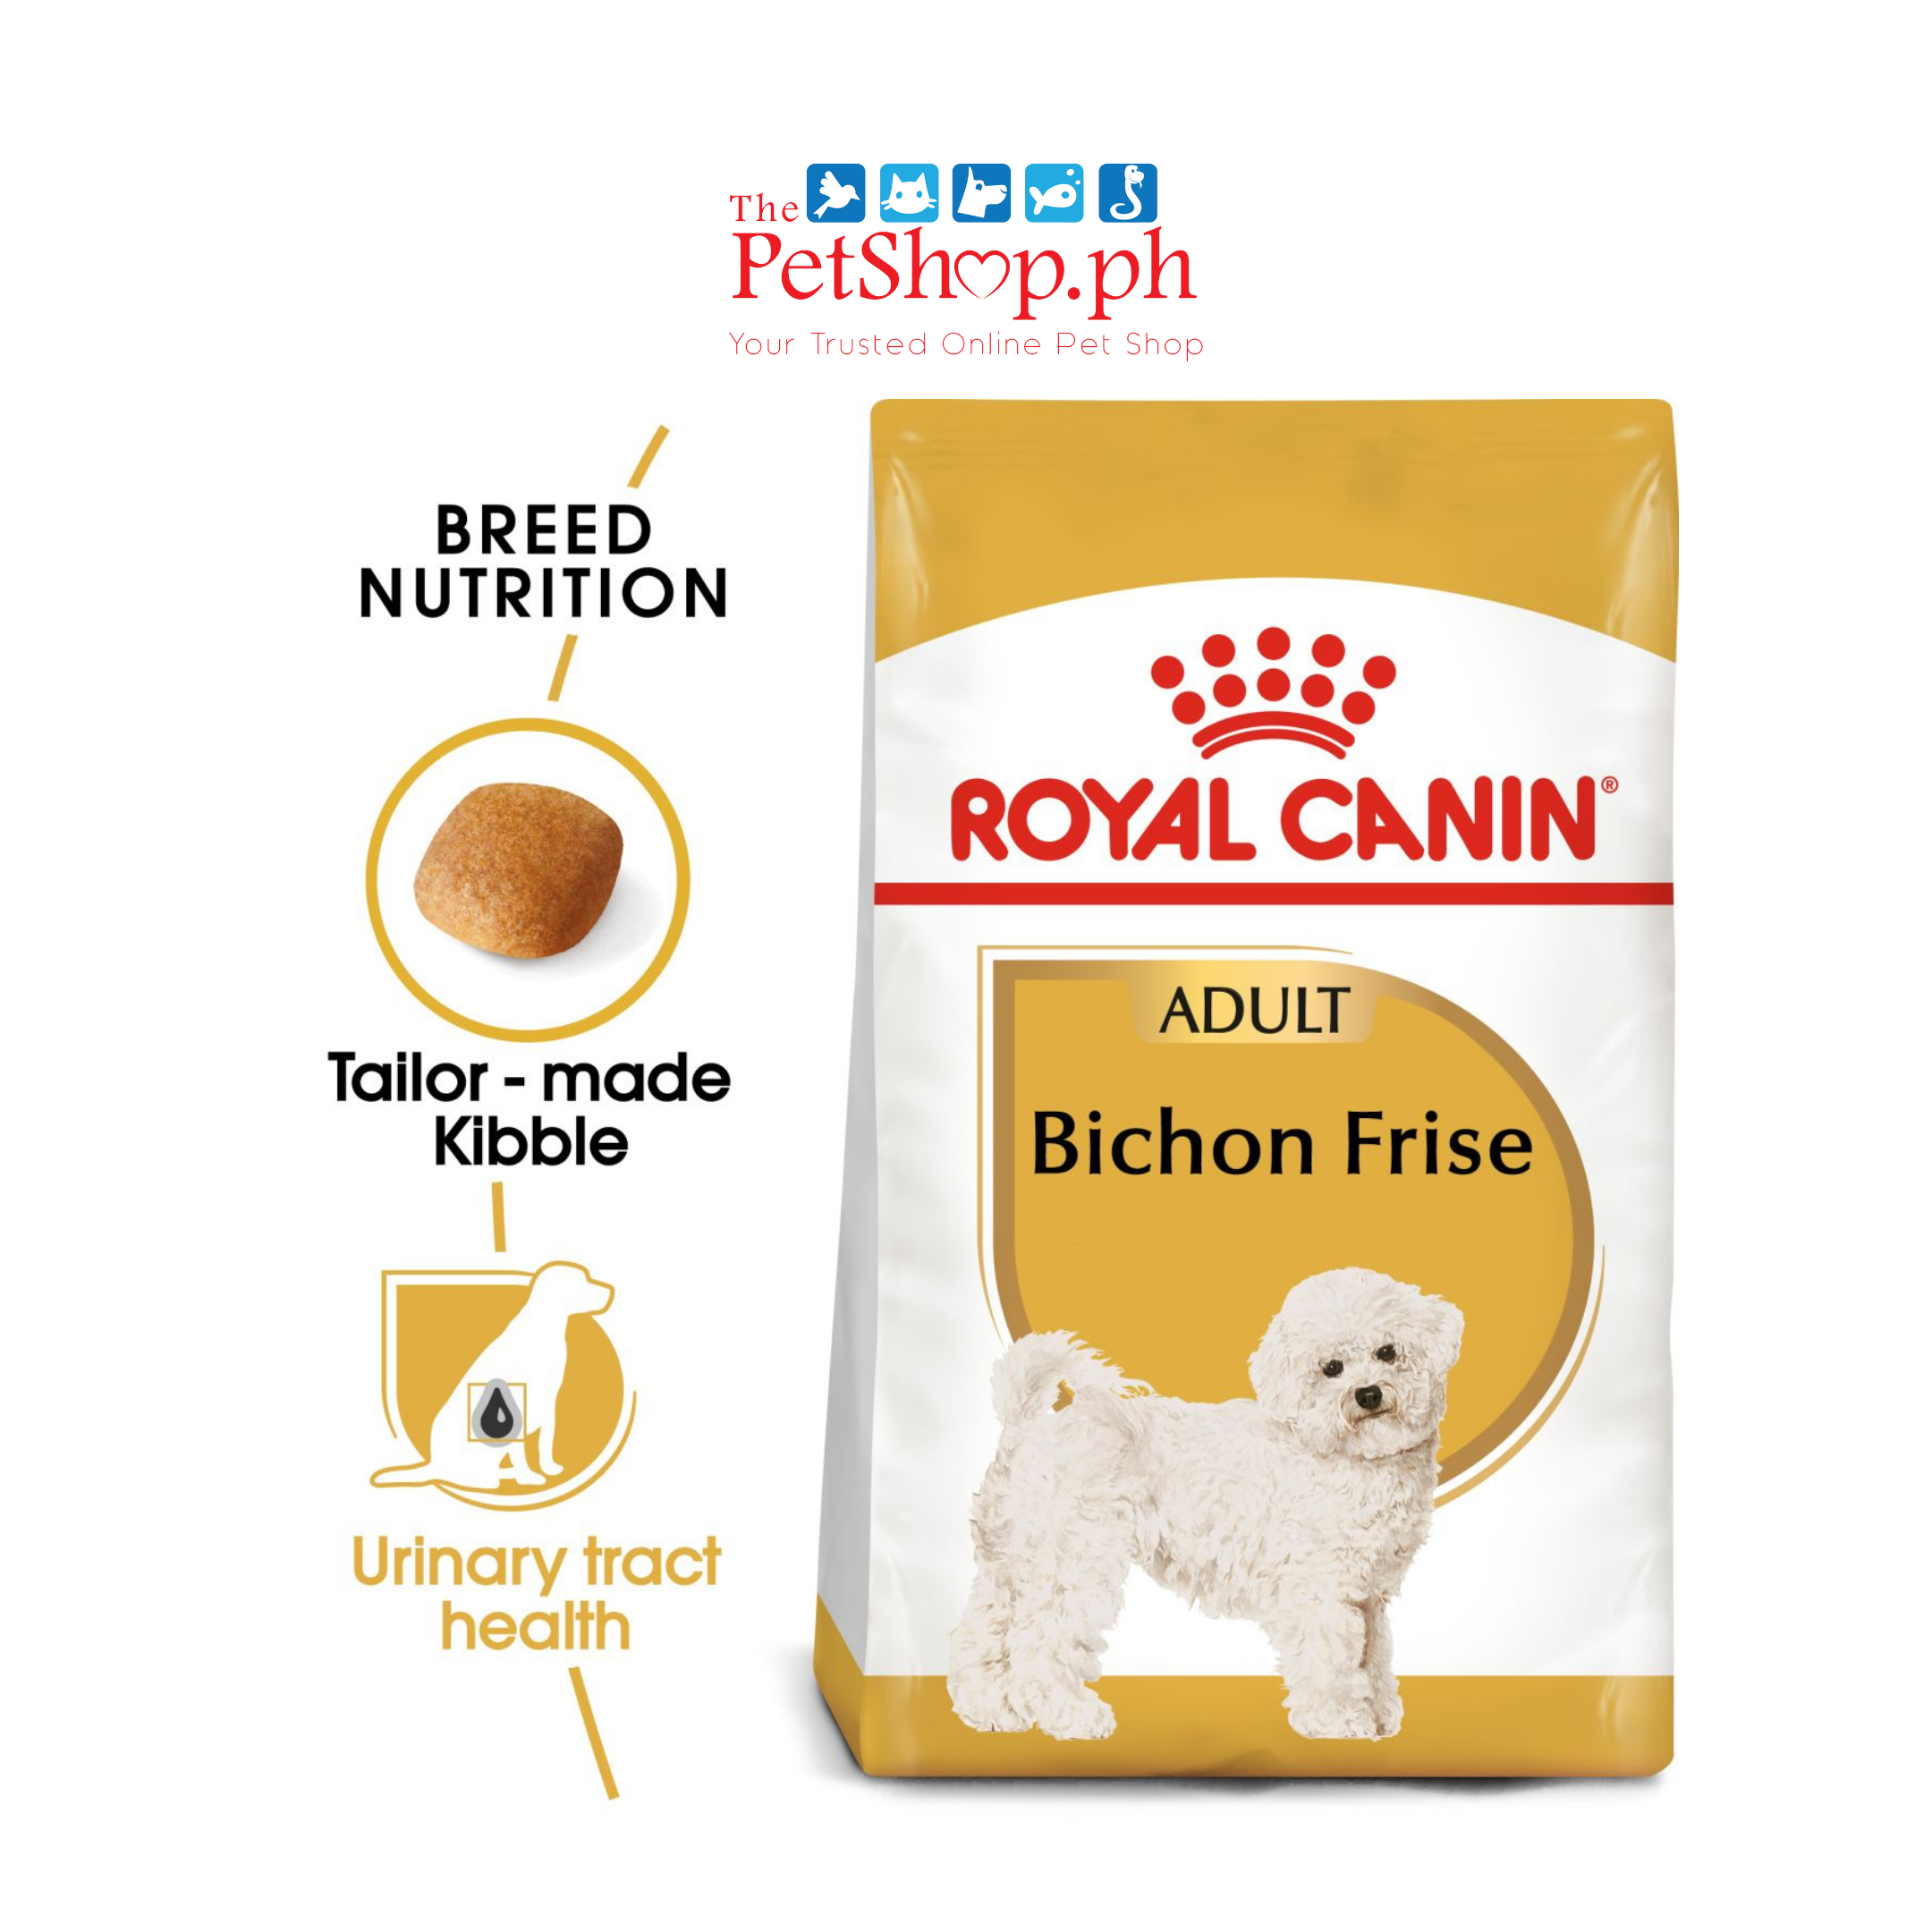 Royal Canin Bichon Frise 500g Adult Dry Dog Food -  Breed Health Nutrition